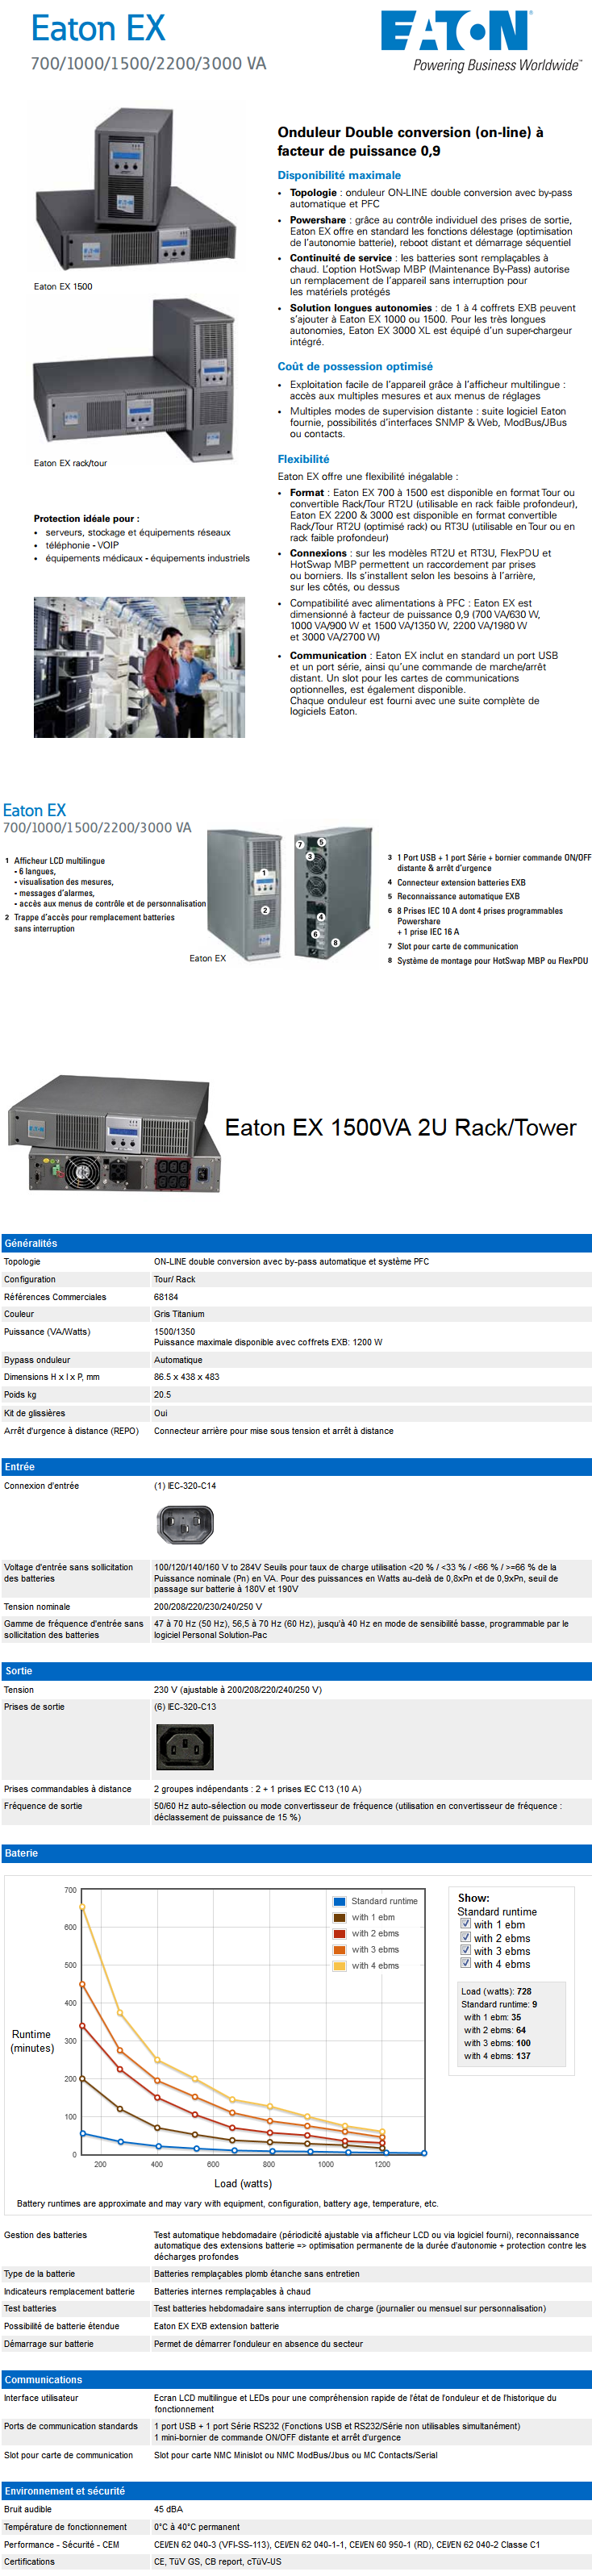 Acheter Onduleur Eaton EX 1500 VA RT2U maroc